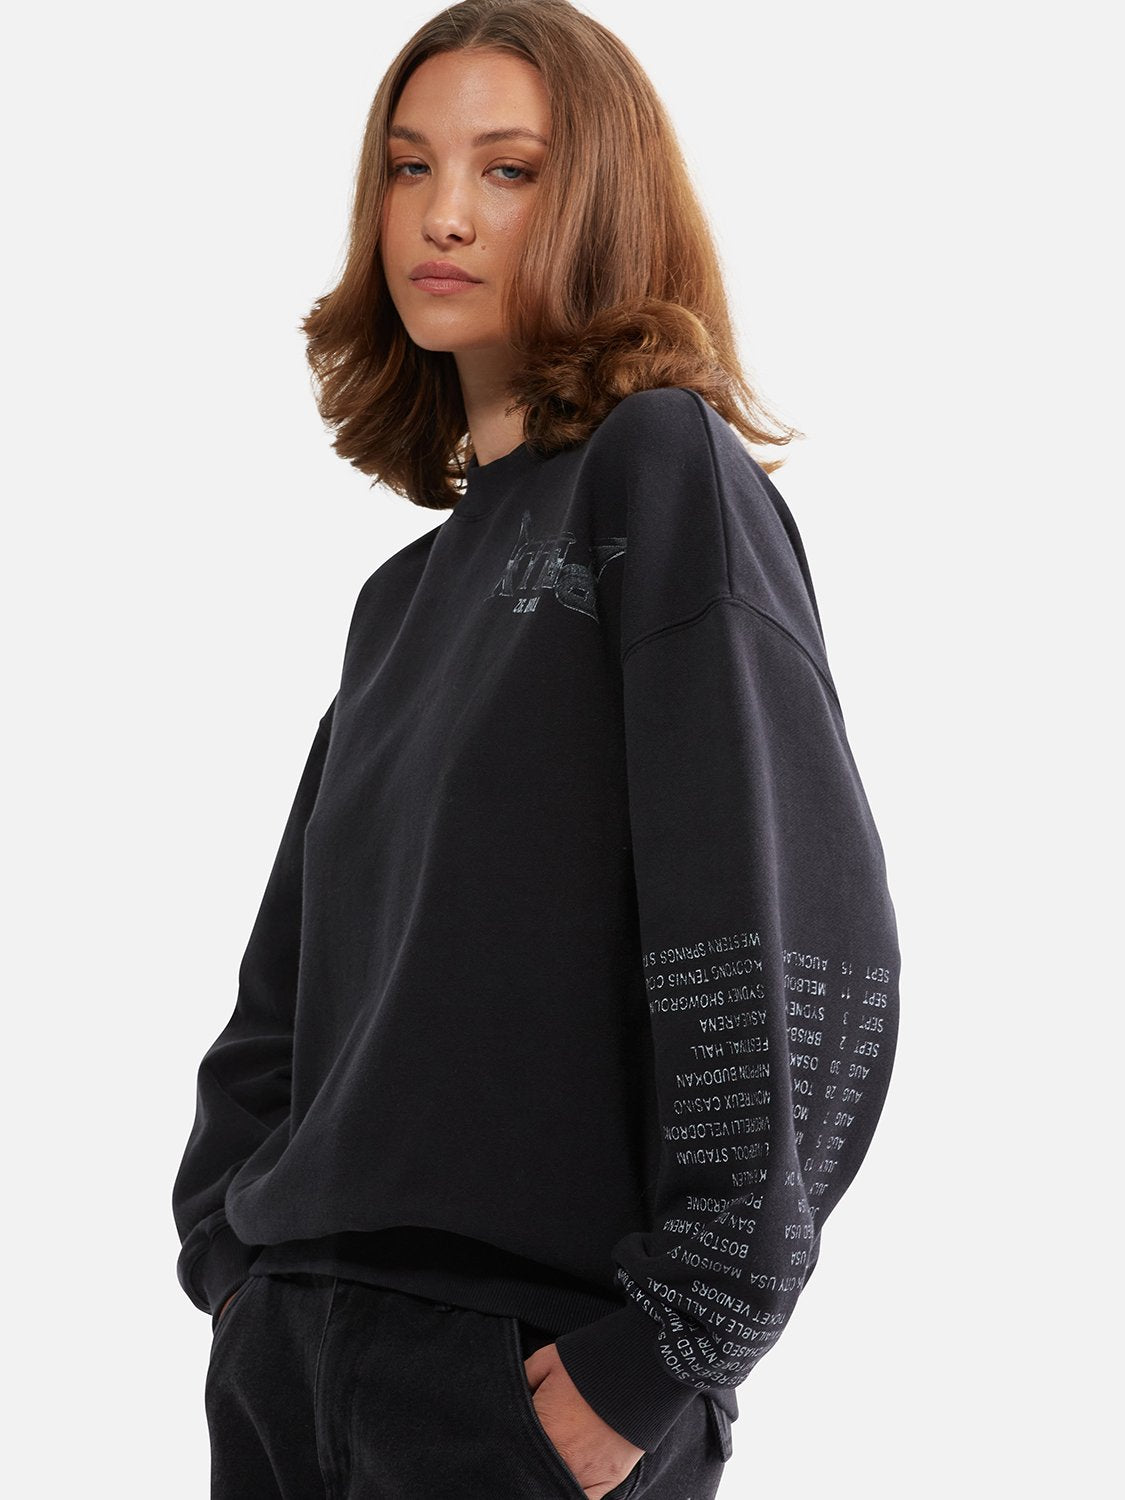 LF Sweater - Washed Black